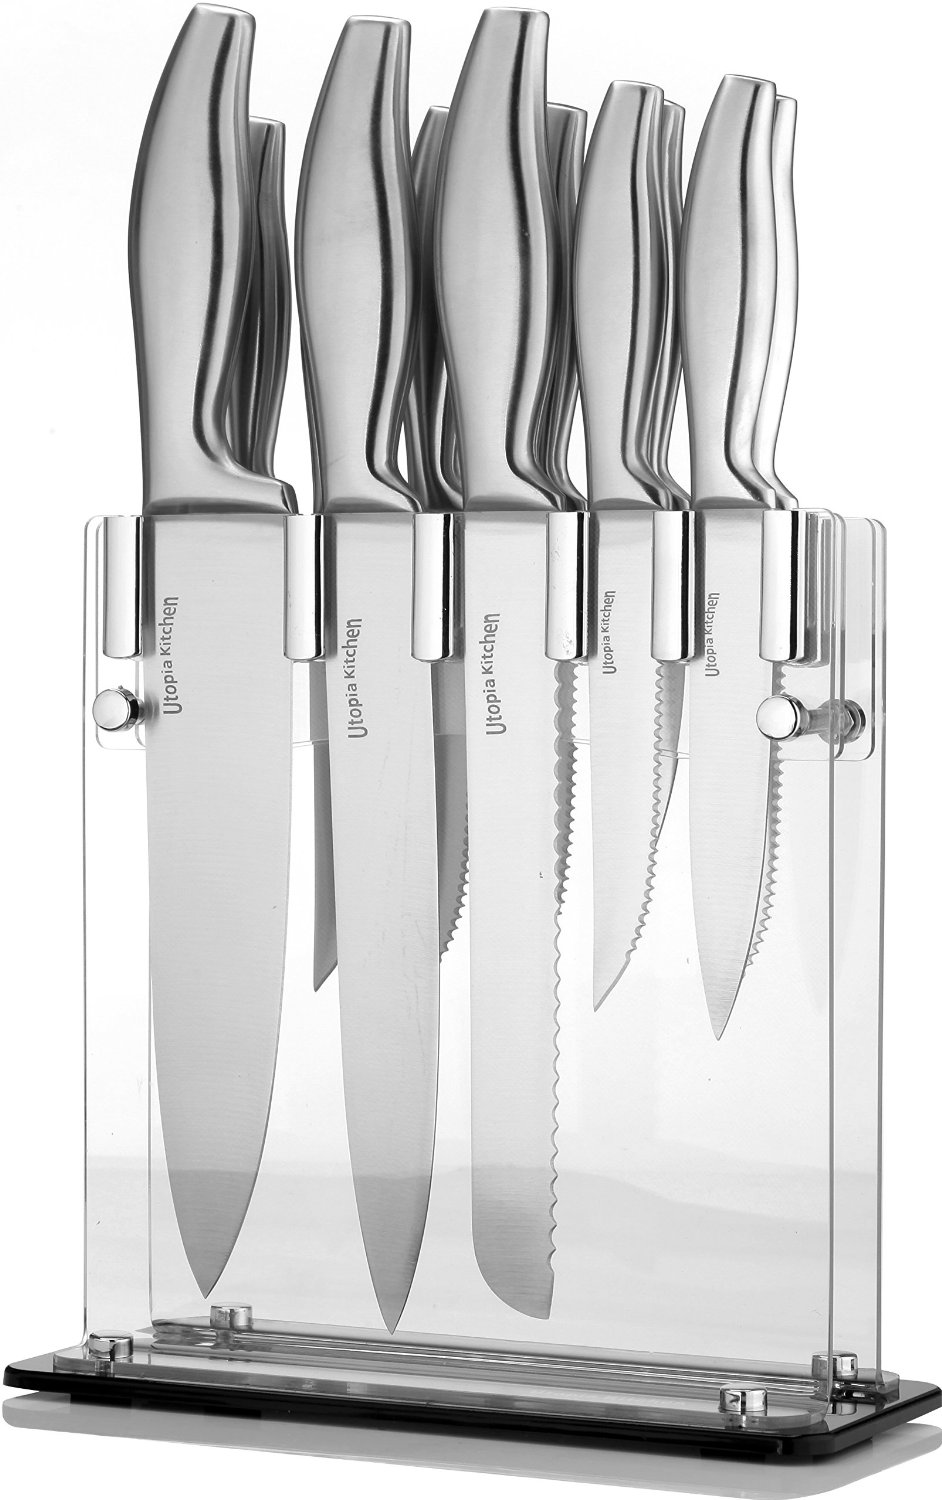 Top 10 Best Kitchen Knife Sets 2017 Top Value Reviews